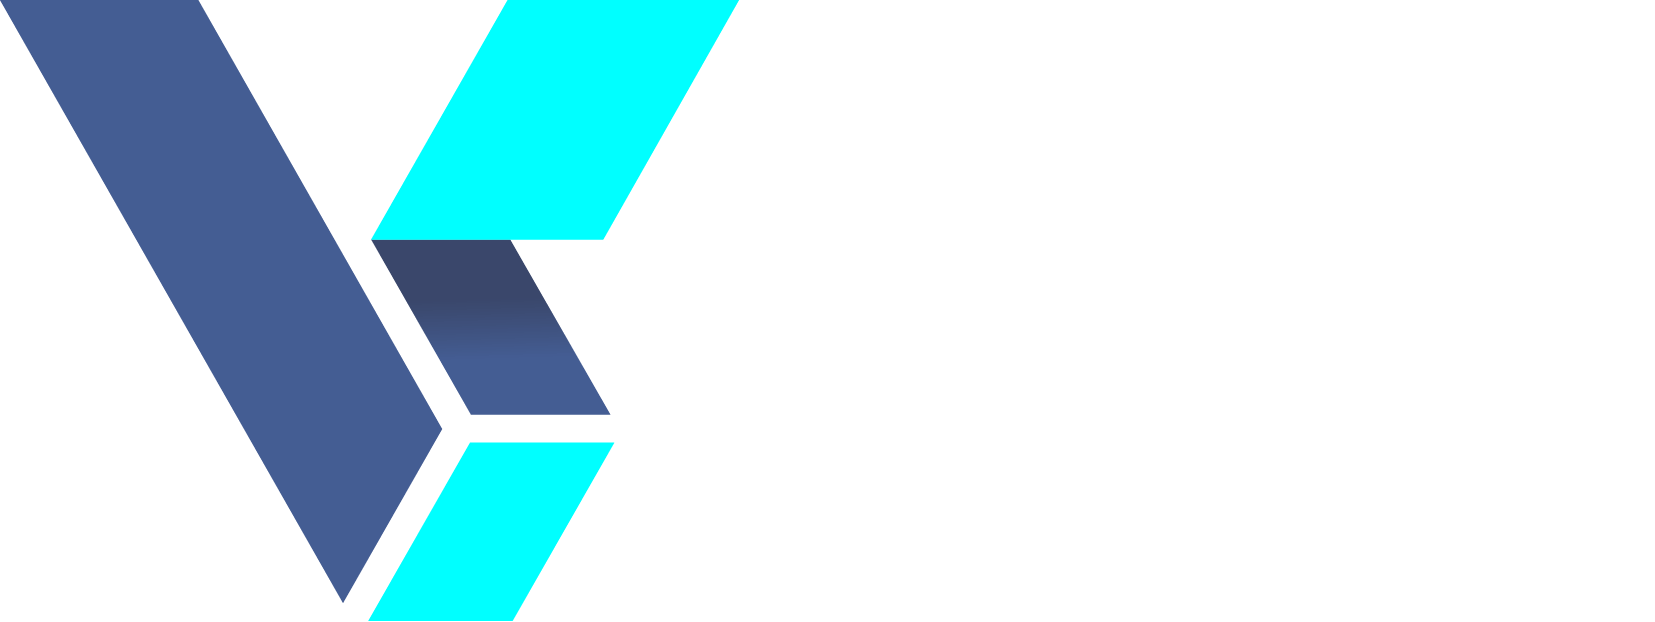 vrb corporation logo